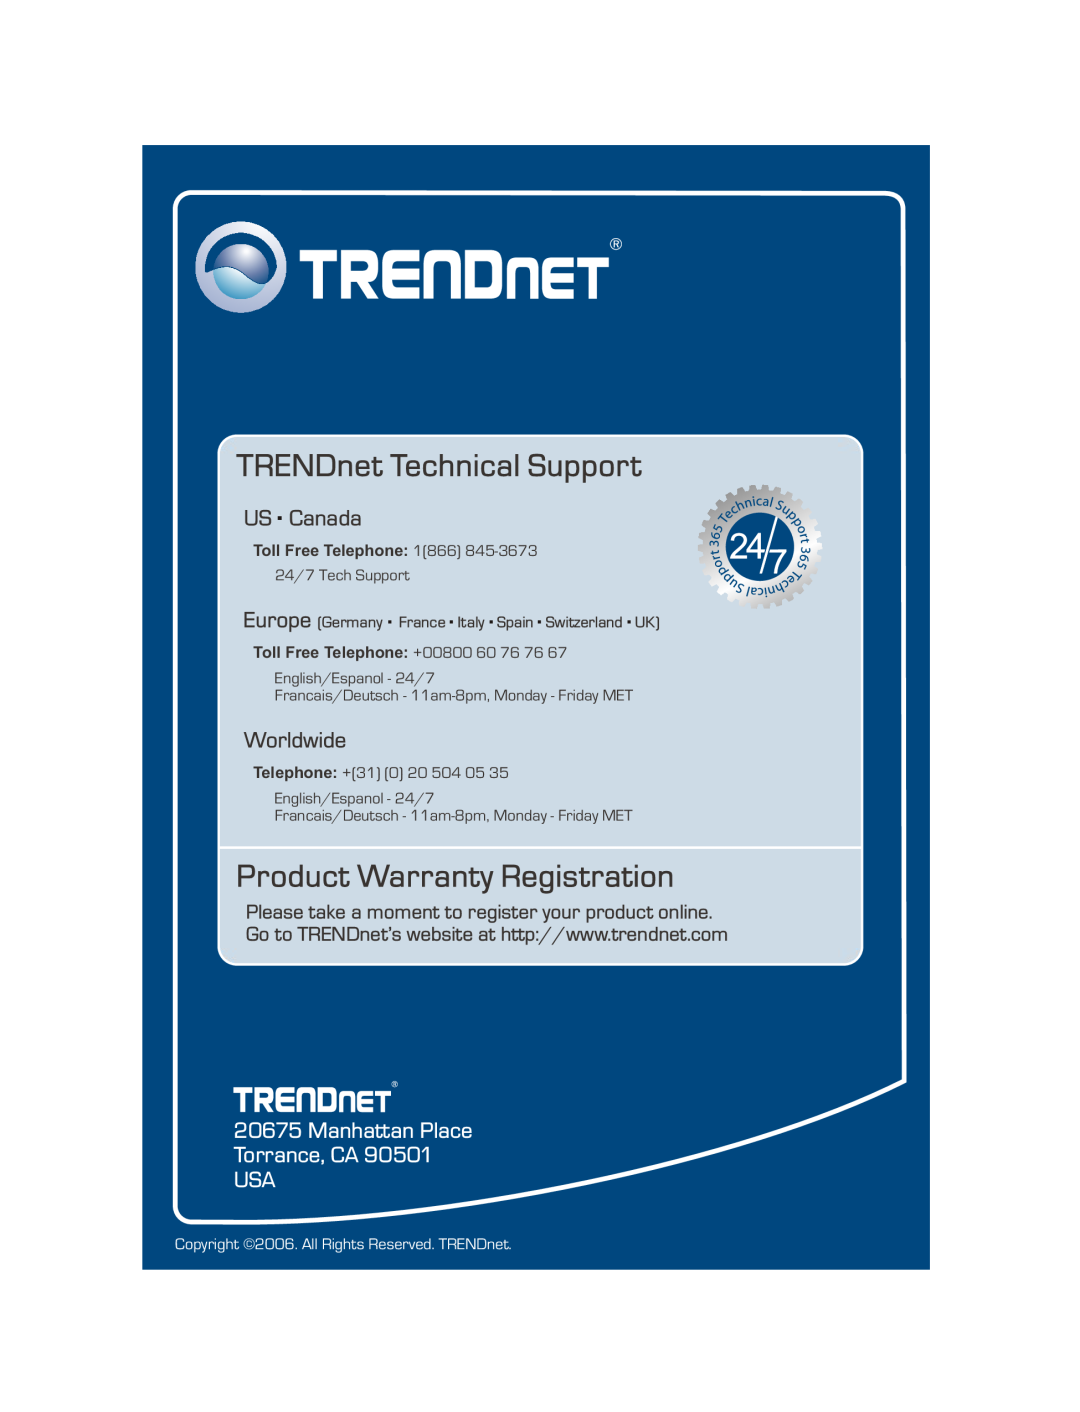 TRENDnet TRENDNET Manhattan Place Torrance, CA USA, TRENDnet Technical Support, Product Warranty Registration, US . Canada 